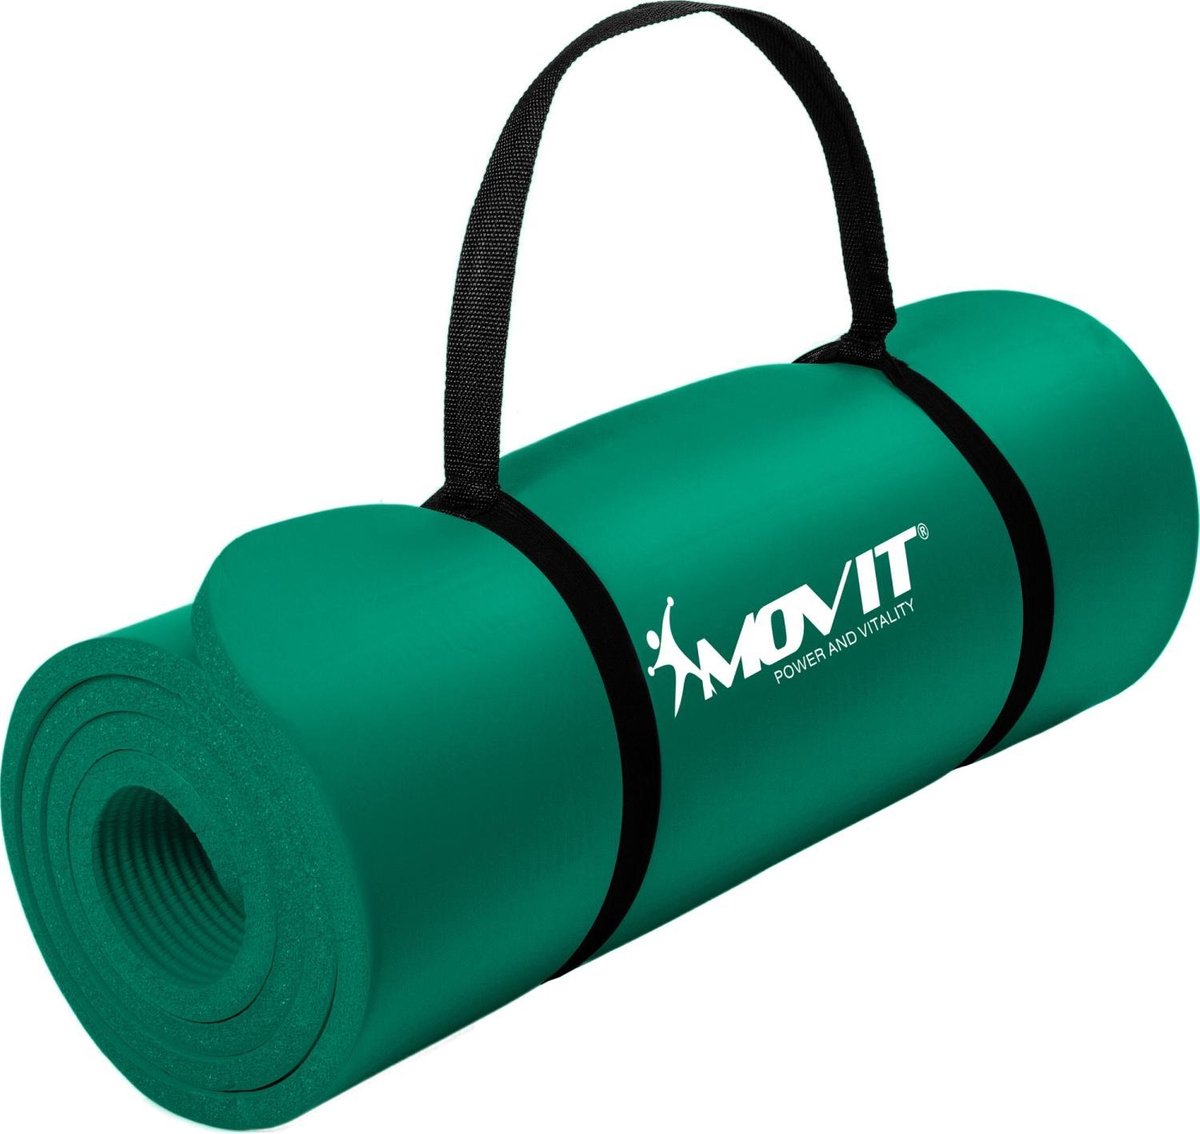 Trainingsmat - Groen - 190x60x1.5cm